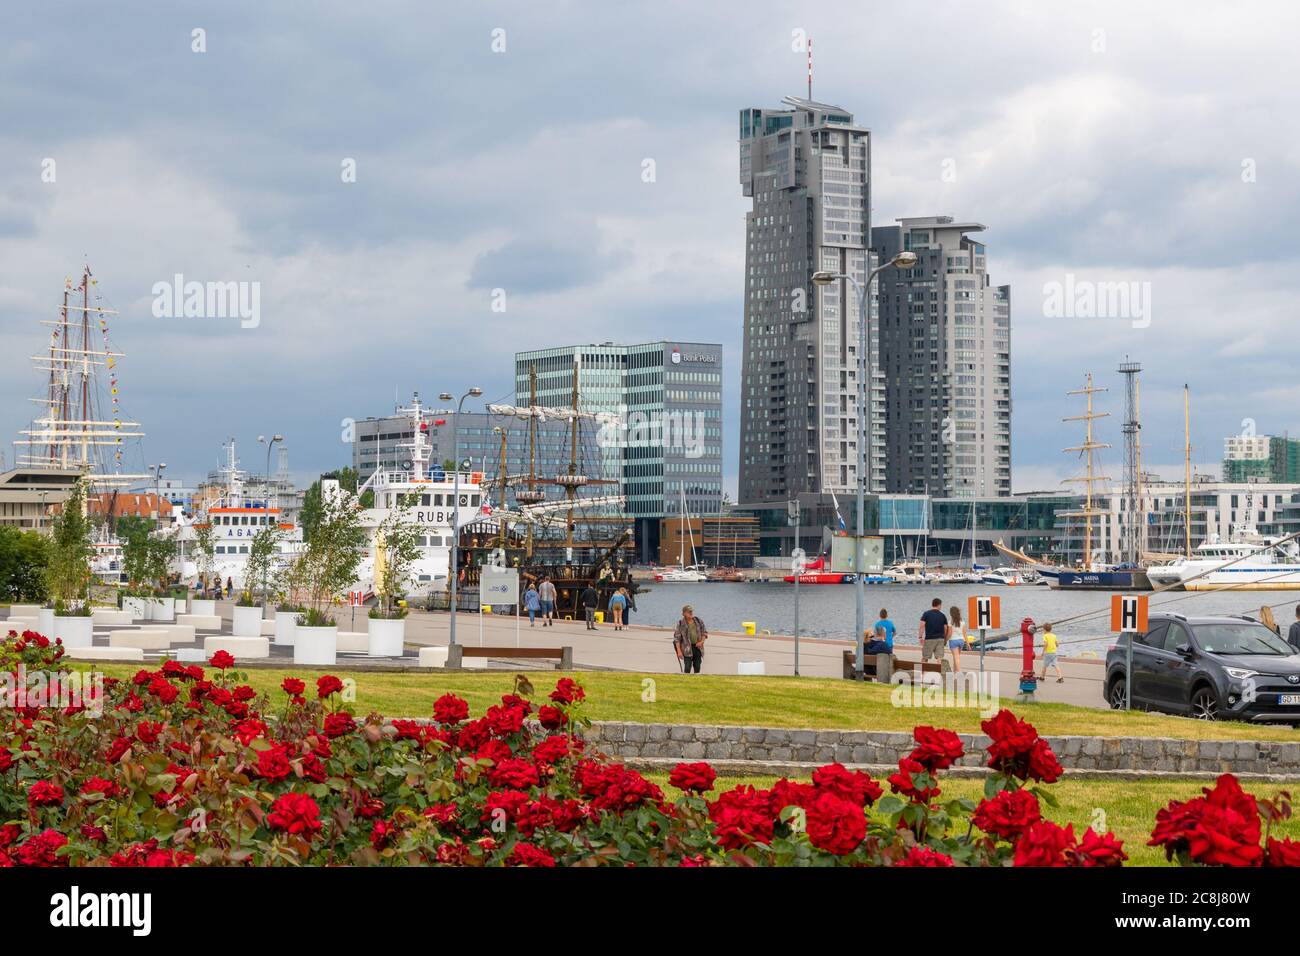 Gdynia, Polen - 30. Juni 2020: Gdynia, Polen - 30. Juni 2020: Strandpromenade mit Blick auf die Sea Towers Wolkenkratzer in Gdynia Stockfoto